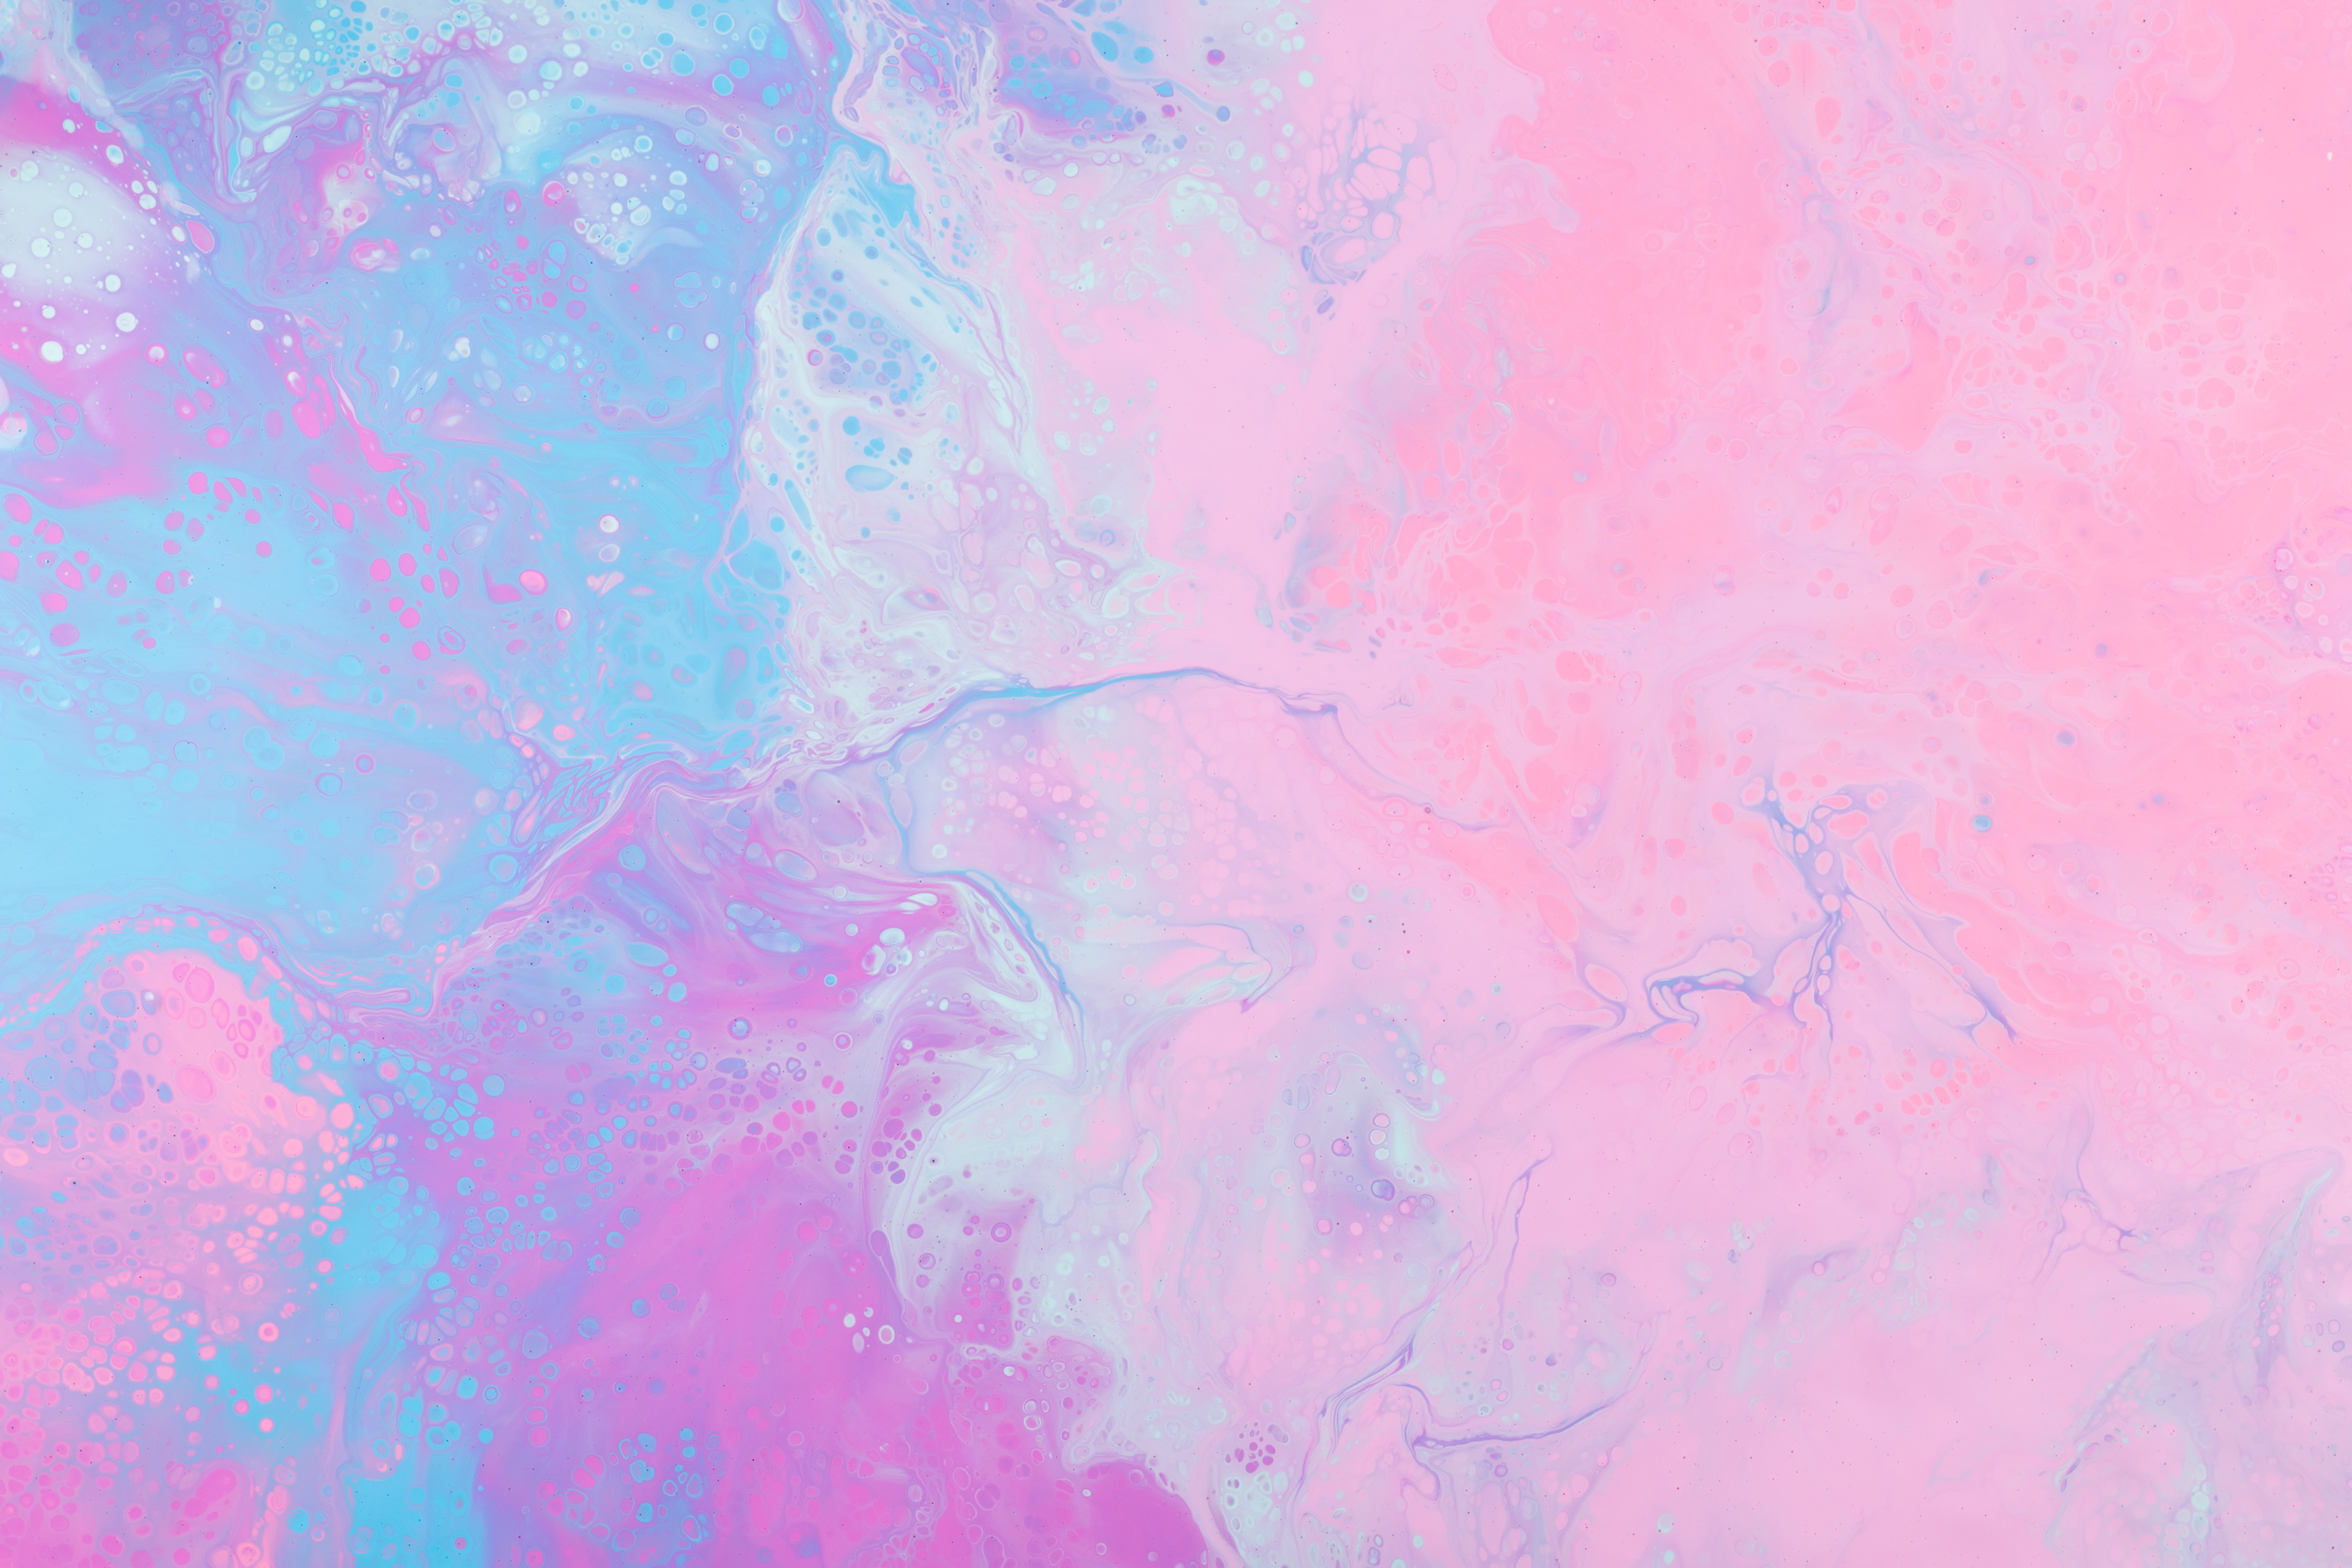 General 6000x4000 pink white blue purple paint splash paint splatter abstract colorful